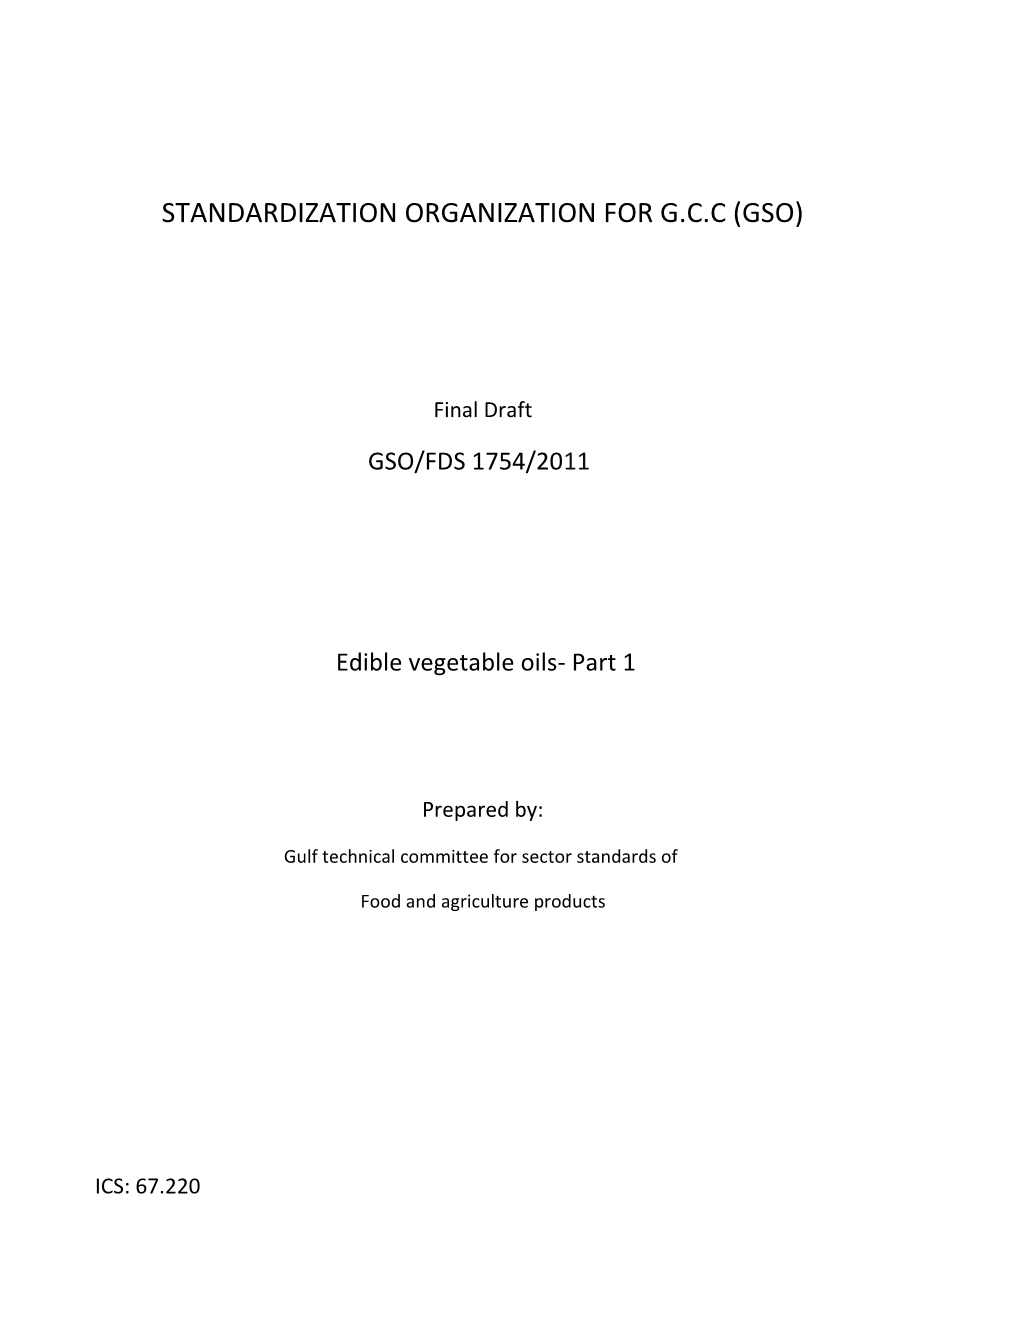 Standardization Organization for G.C.C (Gso)